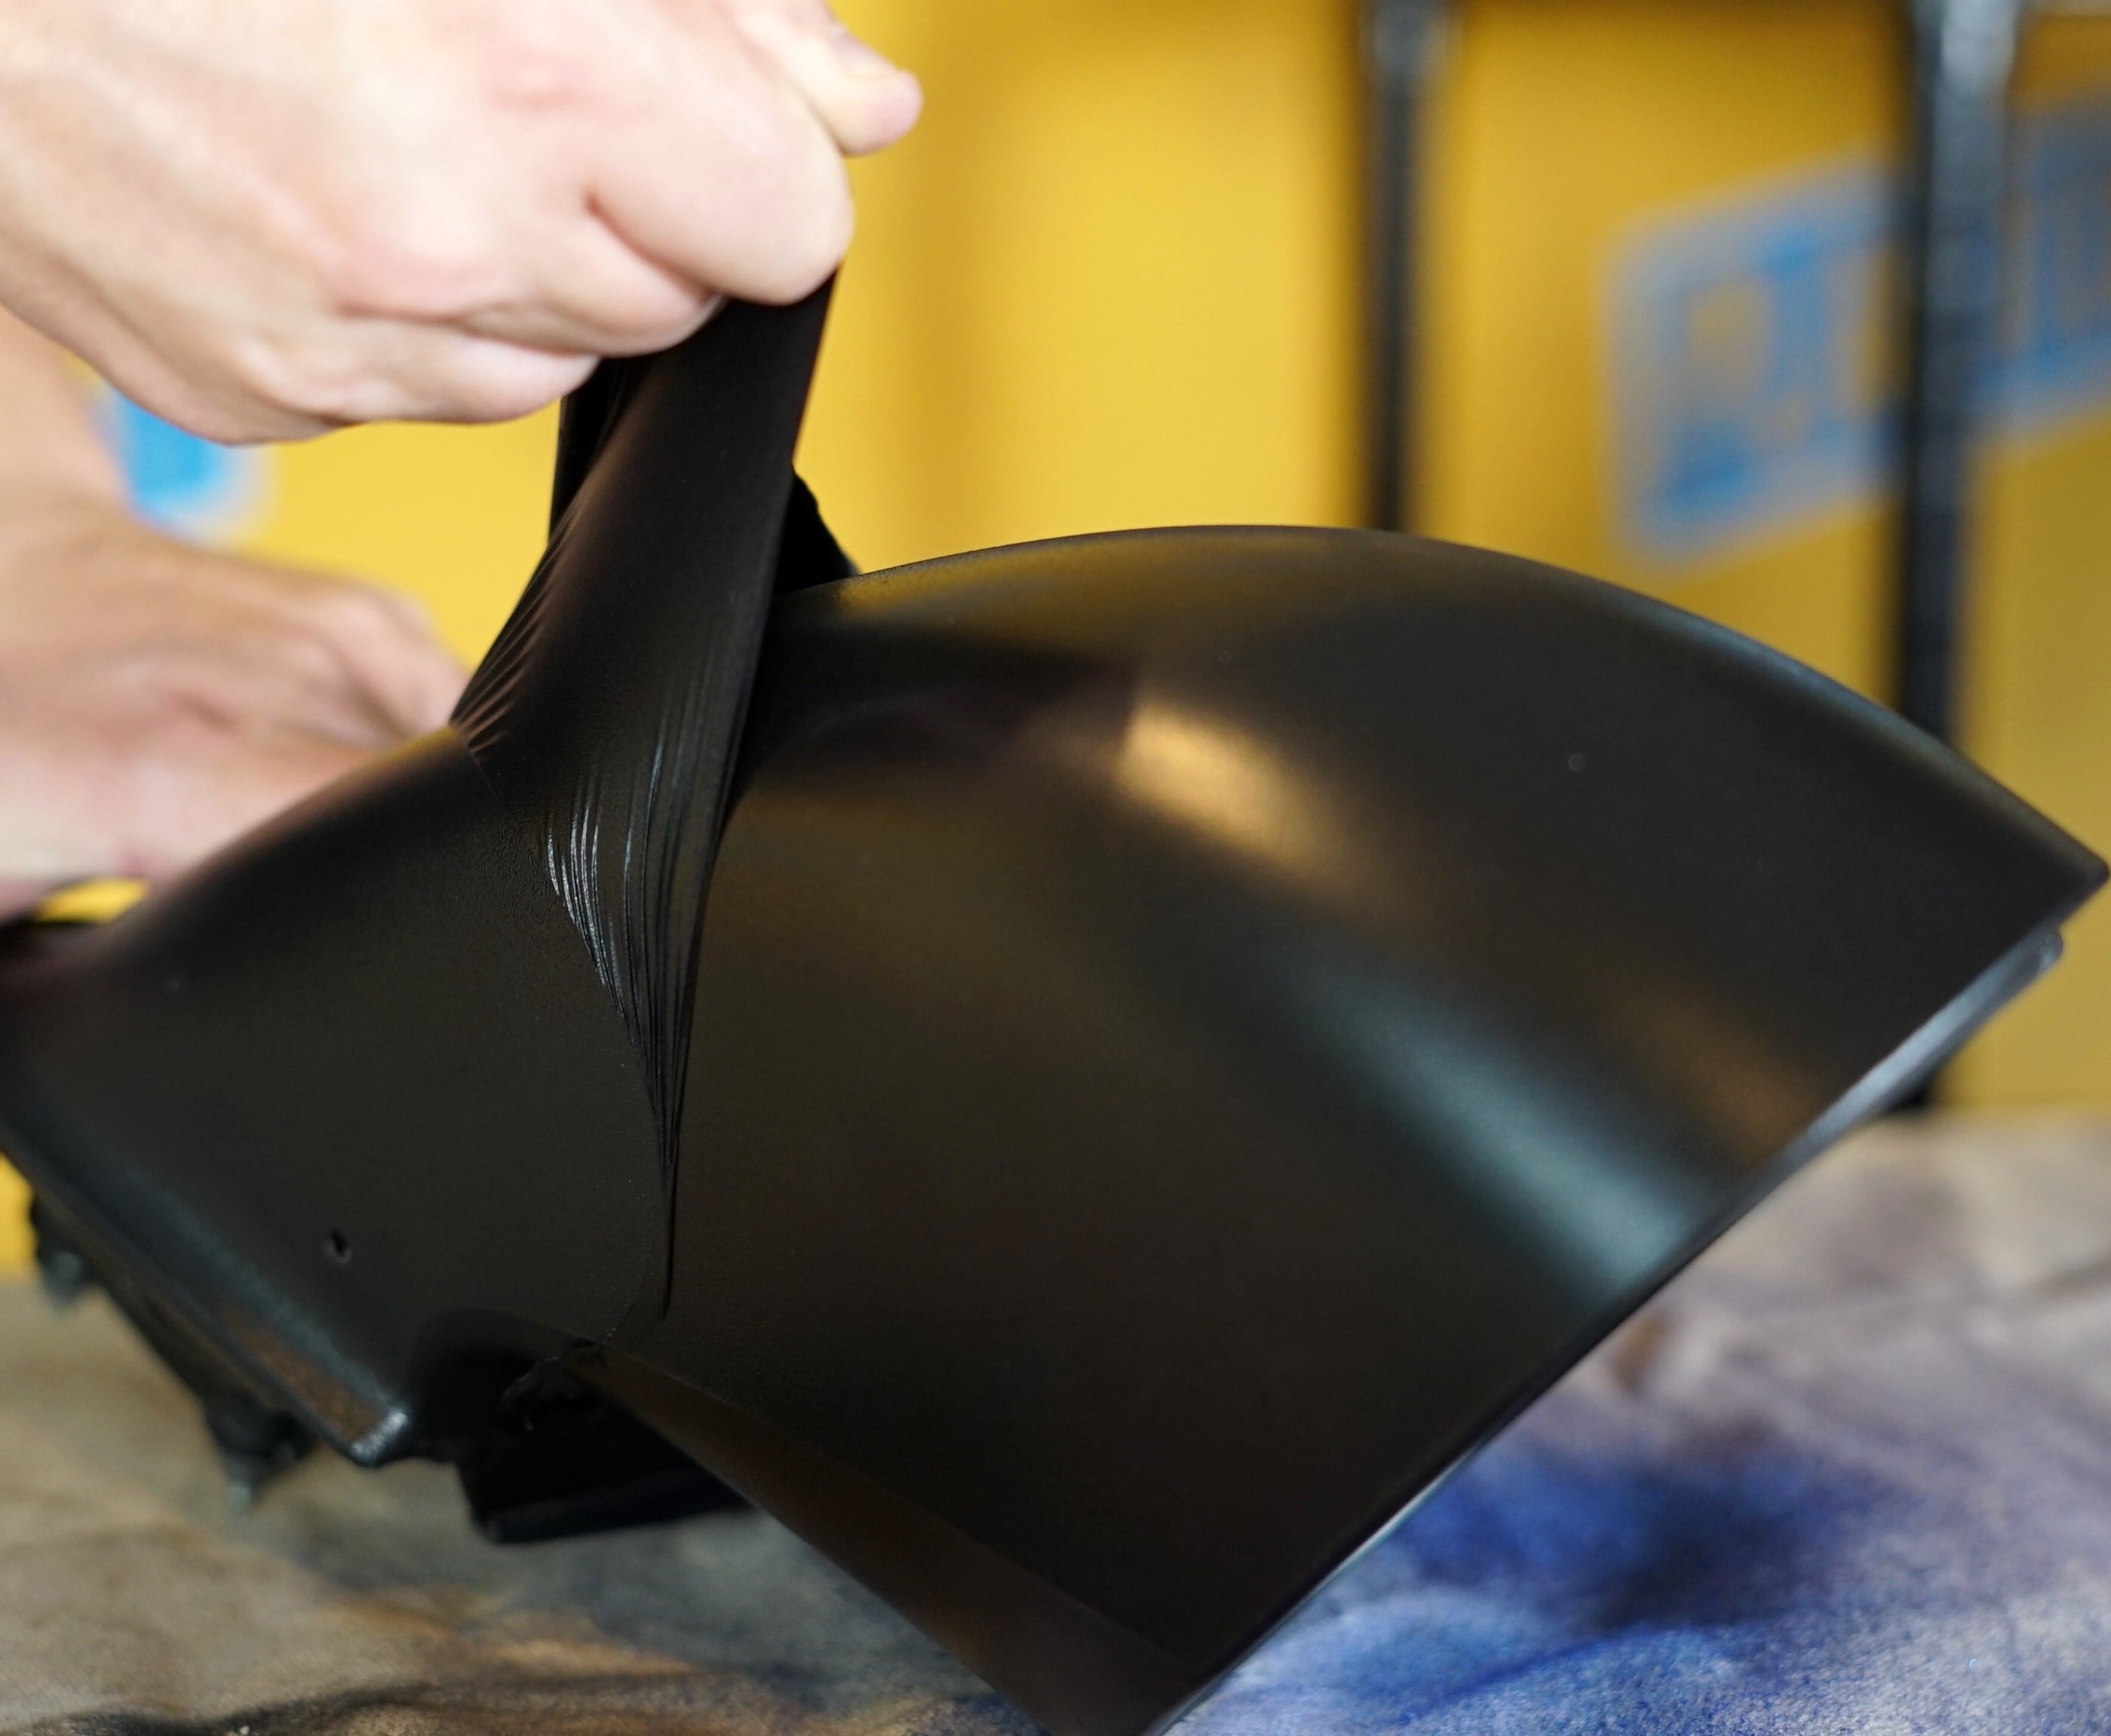 Performix Plasti Dip Multipurpose Rubber Coating, Black - 11 oz can